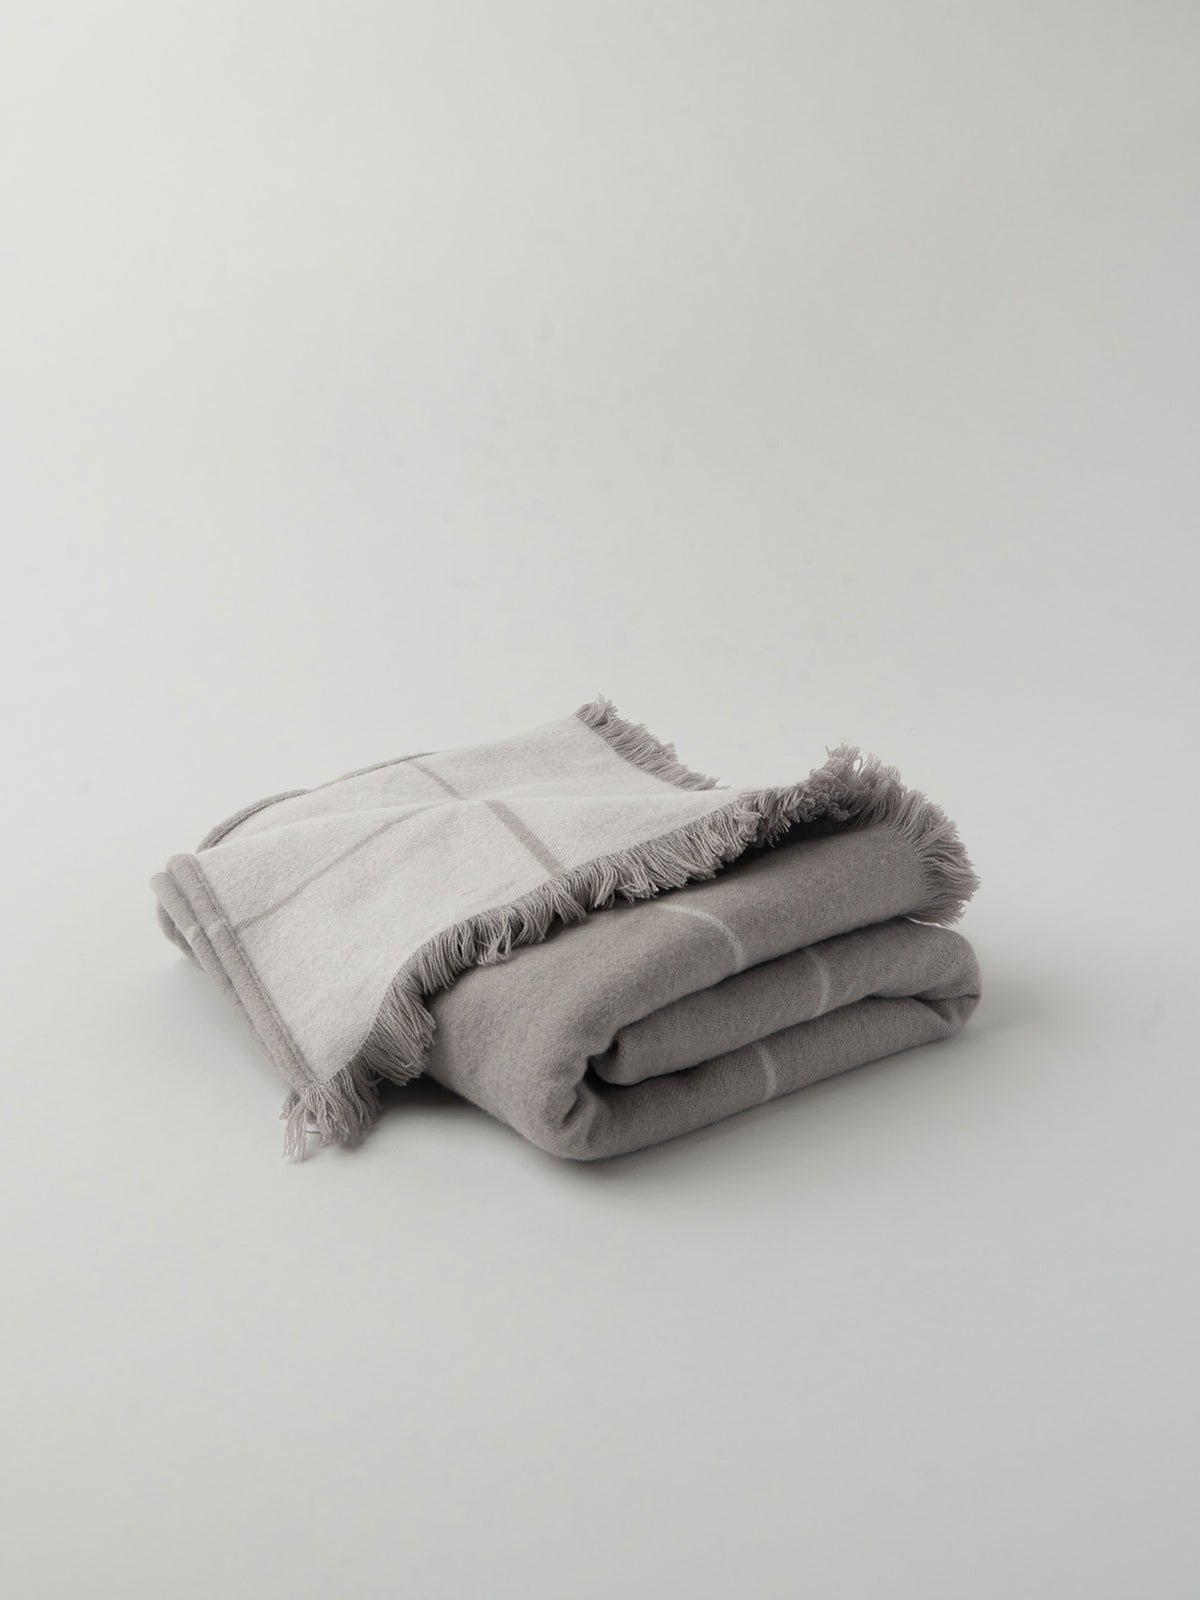 Grey windowpane blanket half folded showing tasseled edge 